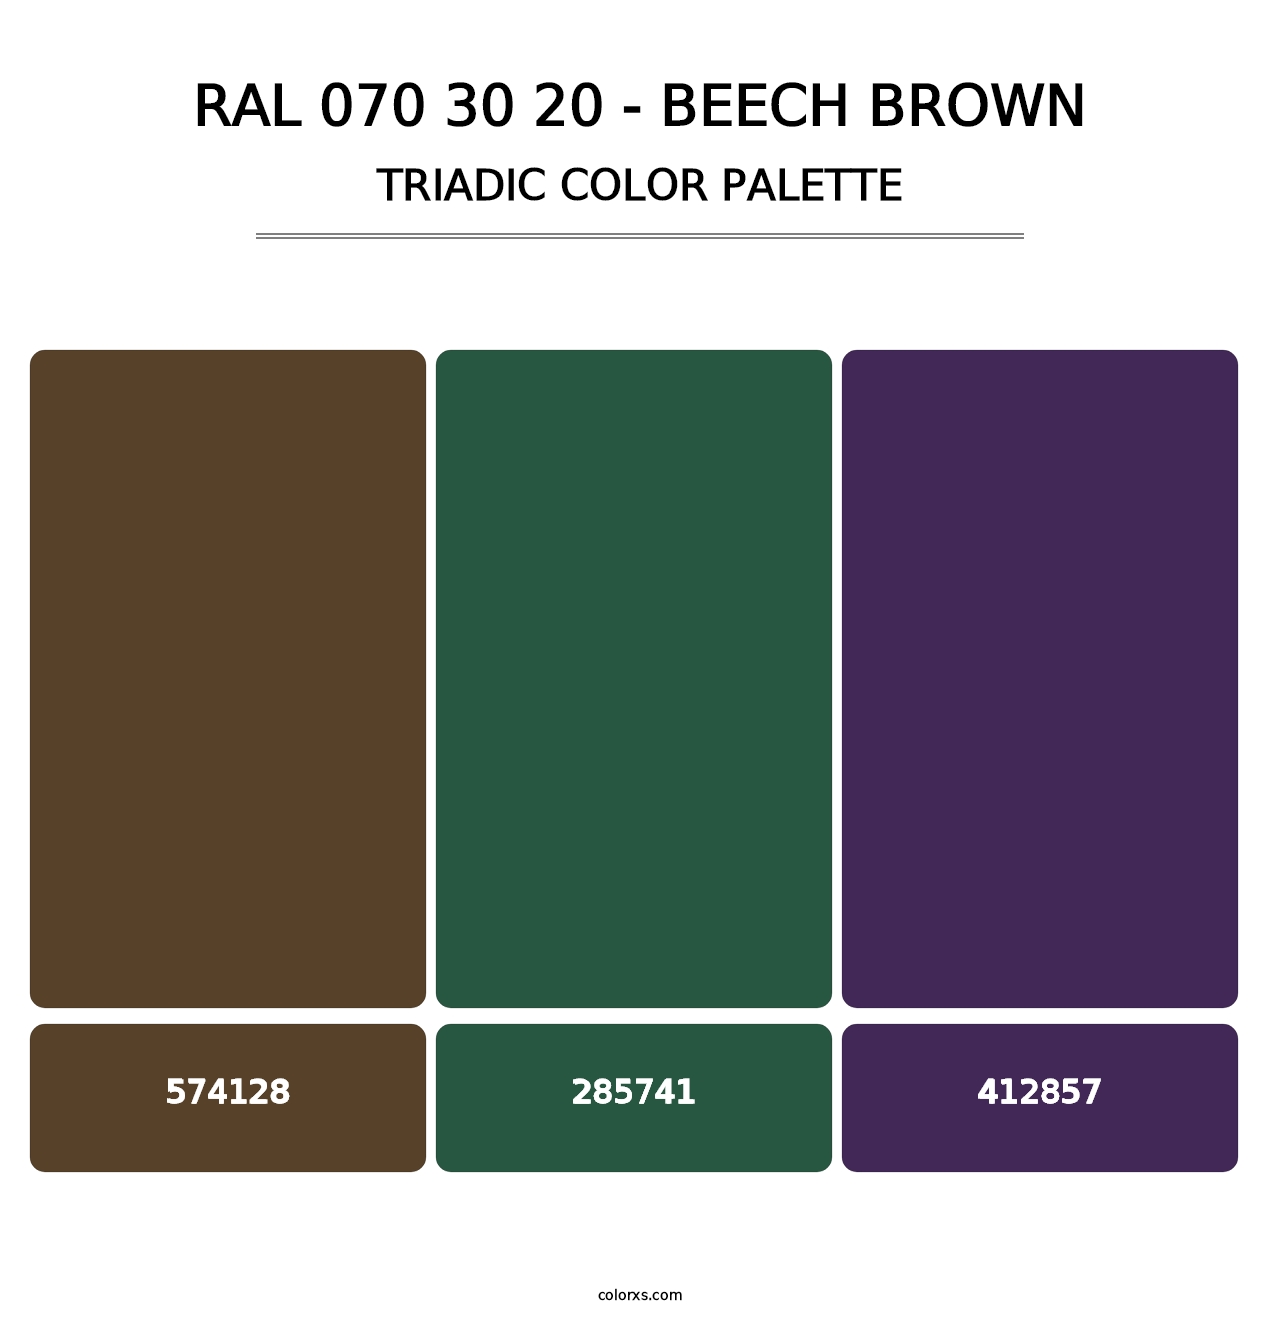 RAL 070 30 20 - Beech Brown - Triadic Color Palette